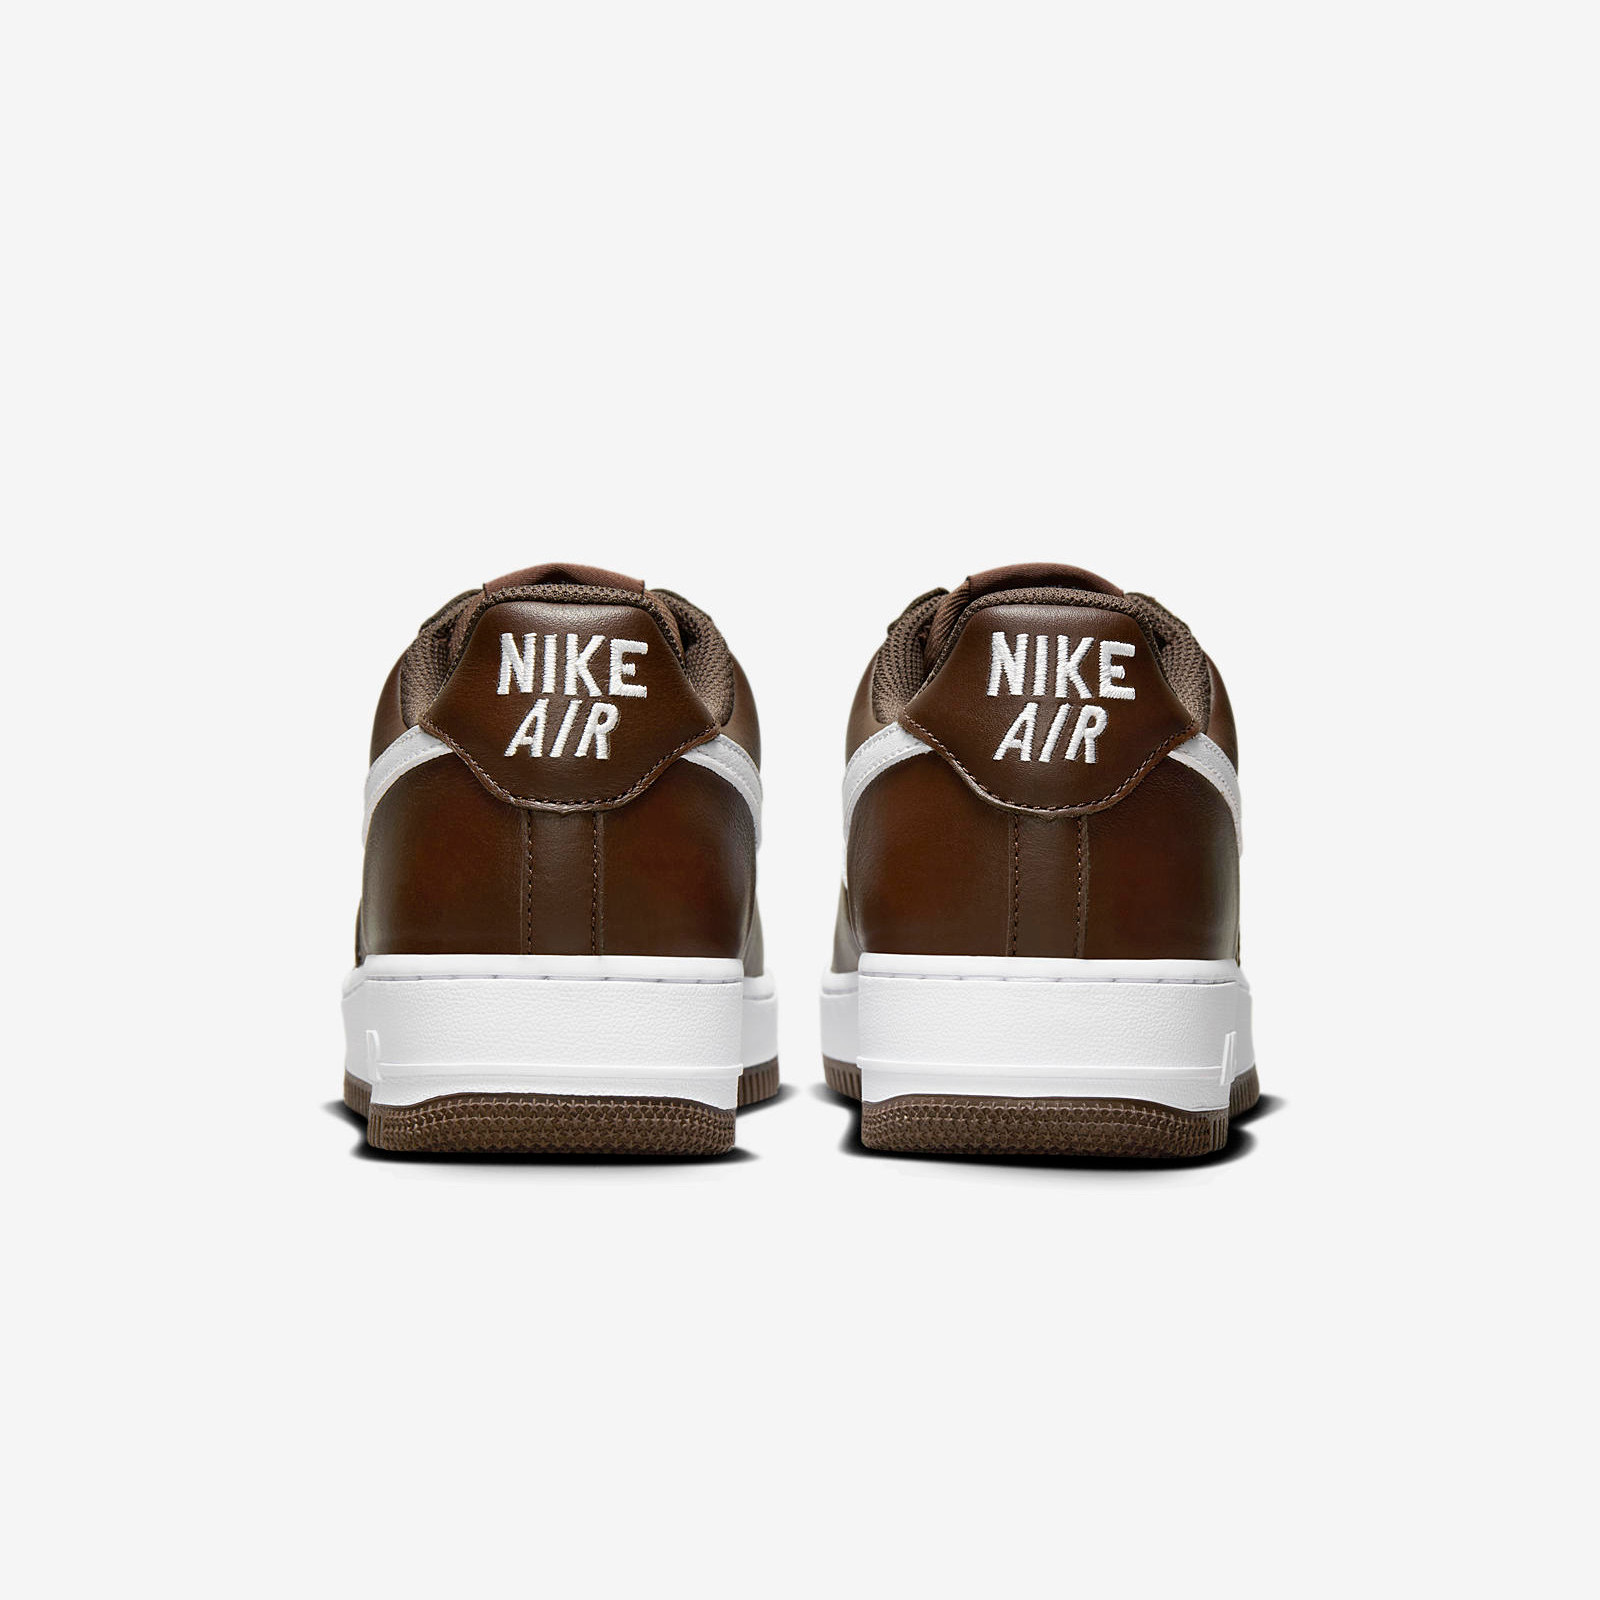 Nike Air Force 1 Low
« Chocolate »